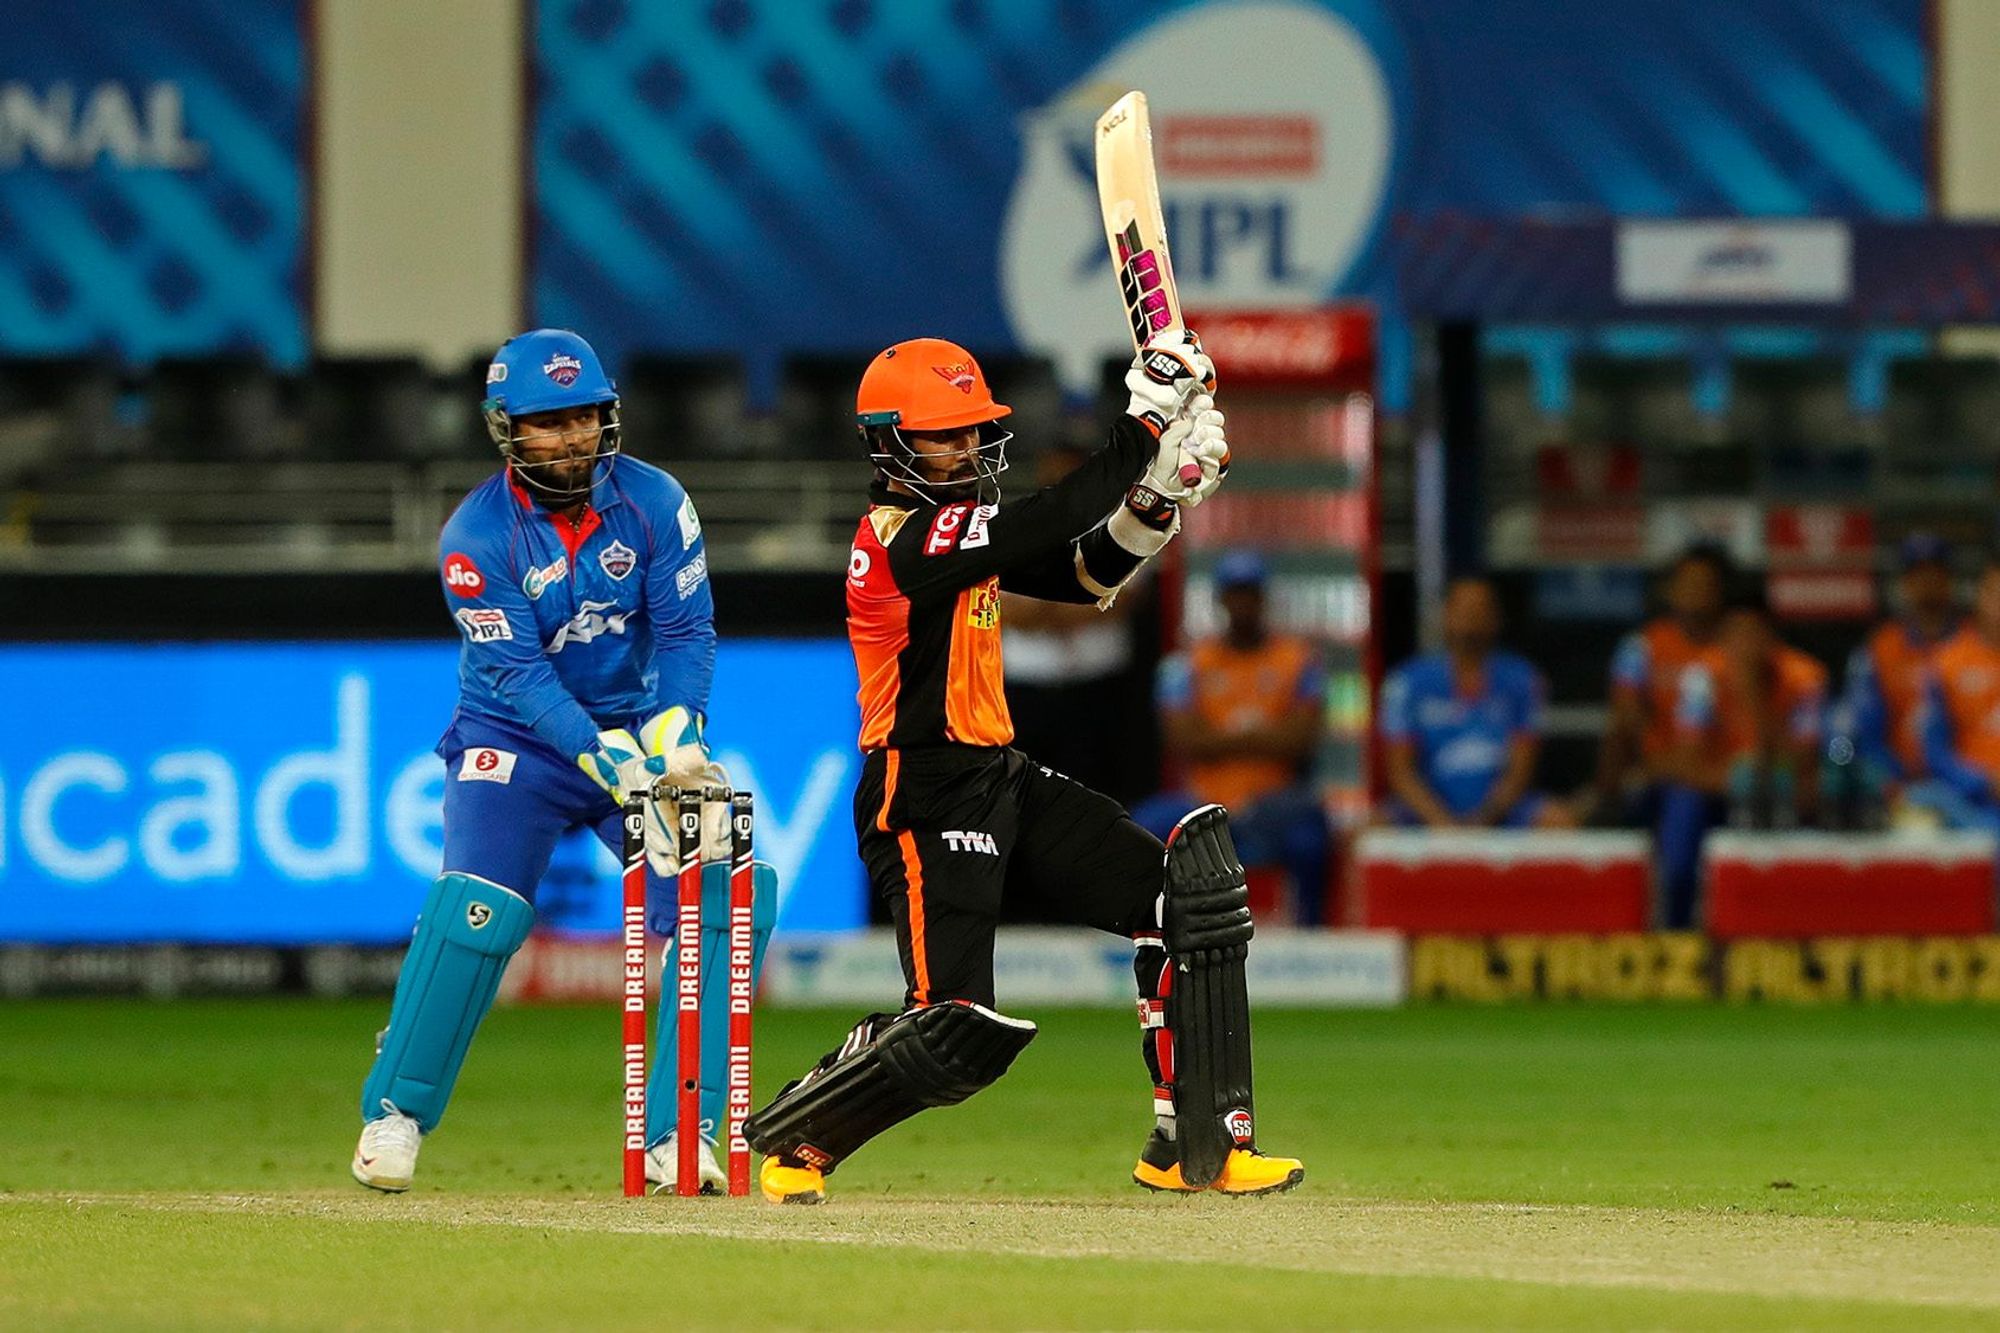 Wriddhiman Saha scored 87 runs off 45 balls against Delhi Capitals in Dubai. (Photo - BCCI / IPL)